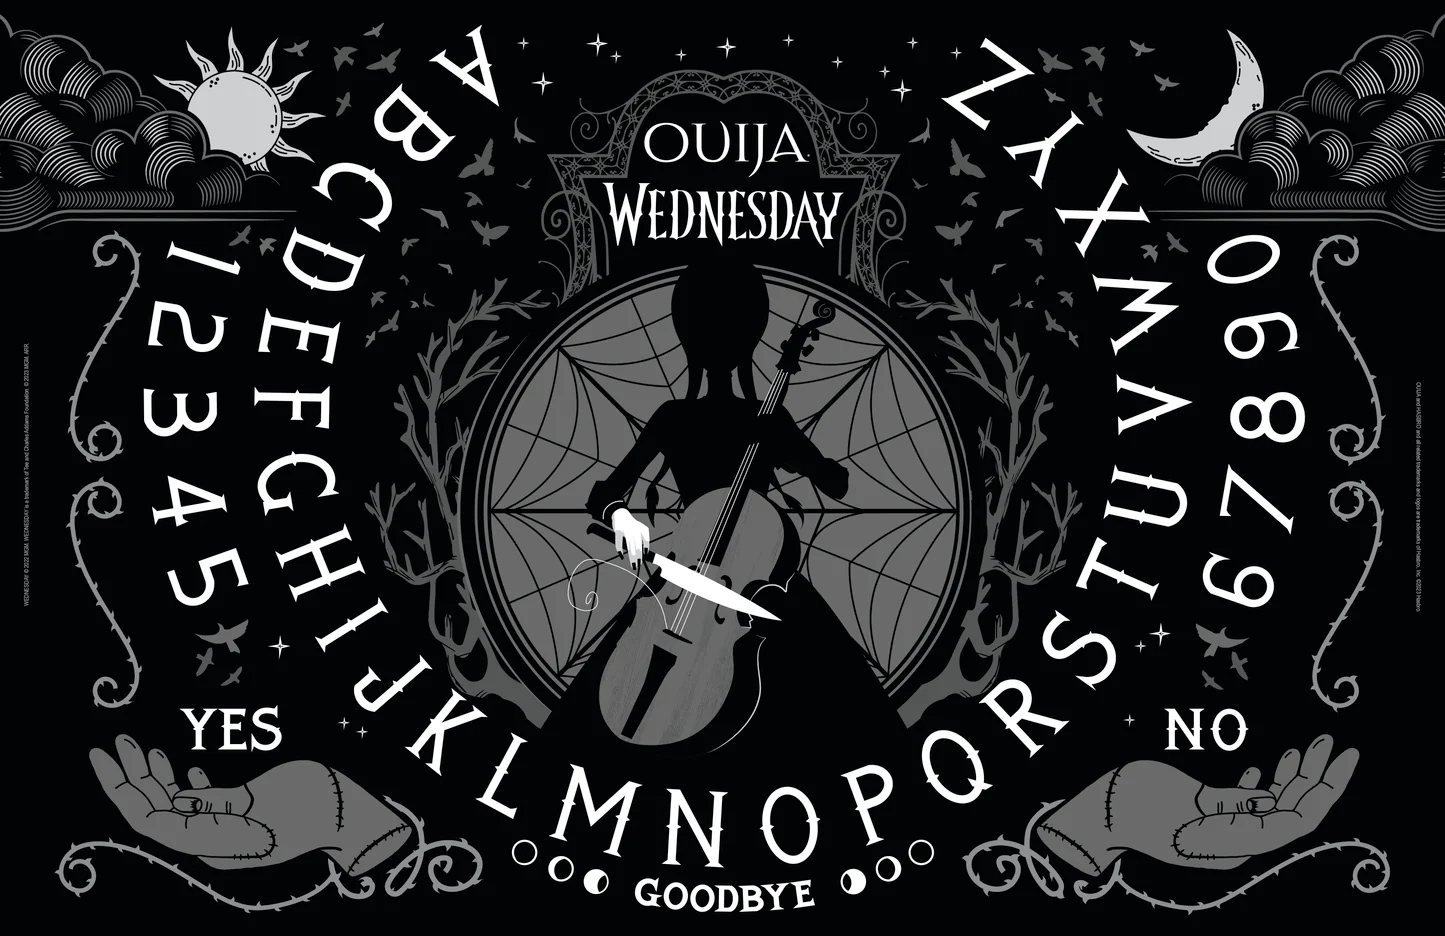 Tábua Ouija Wednesday Addams com Tinta Fosforescente (Netflix)